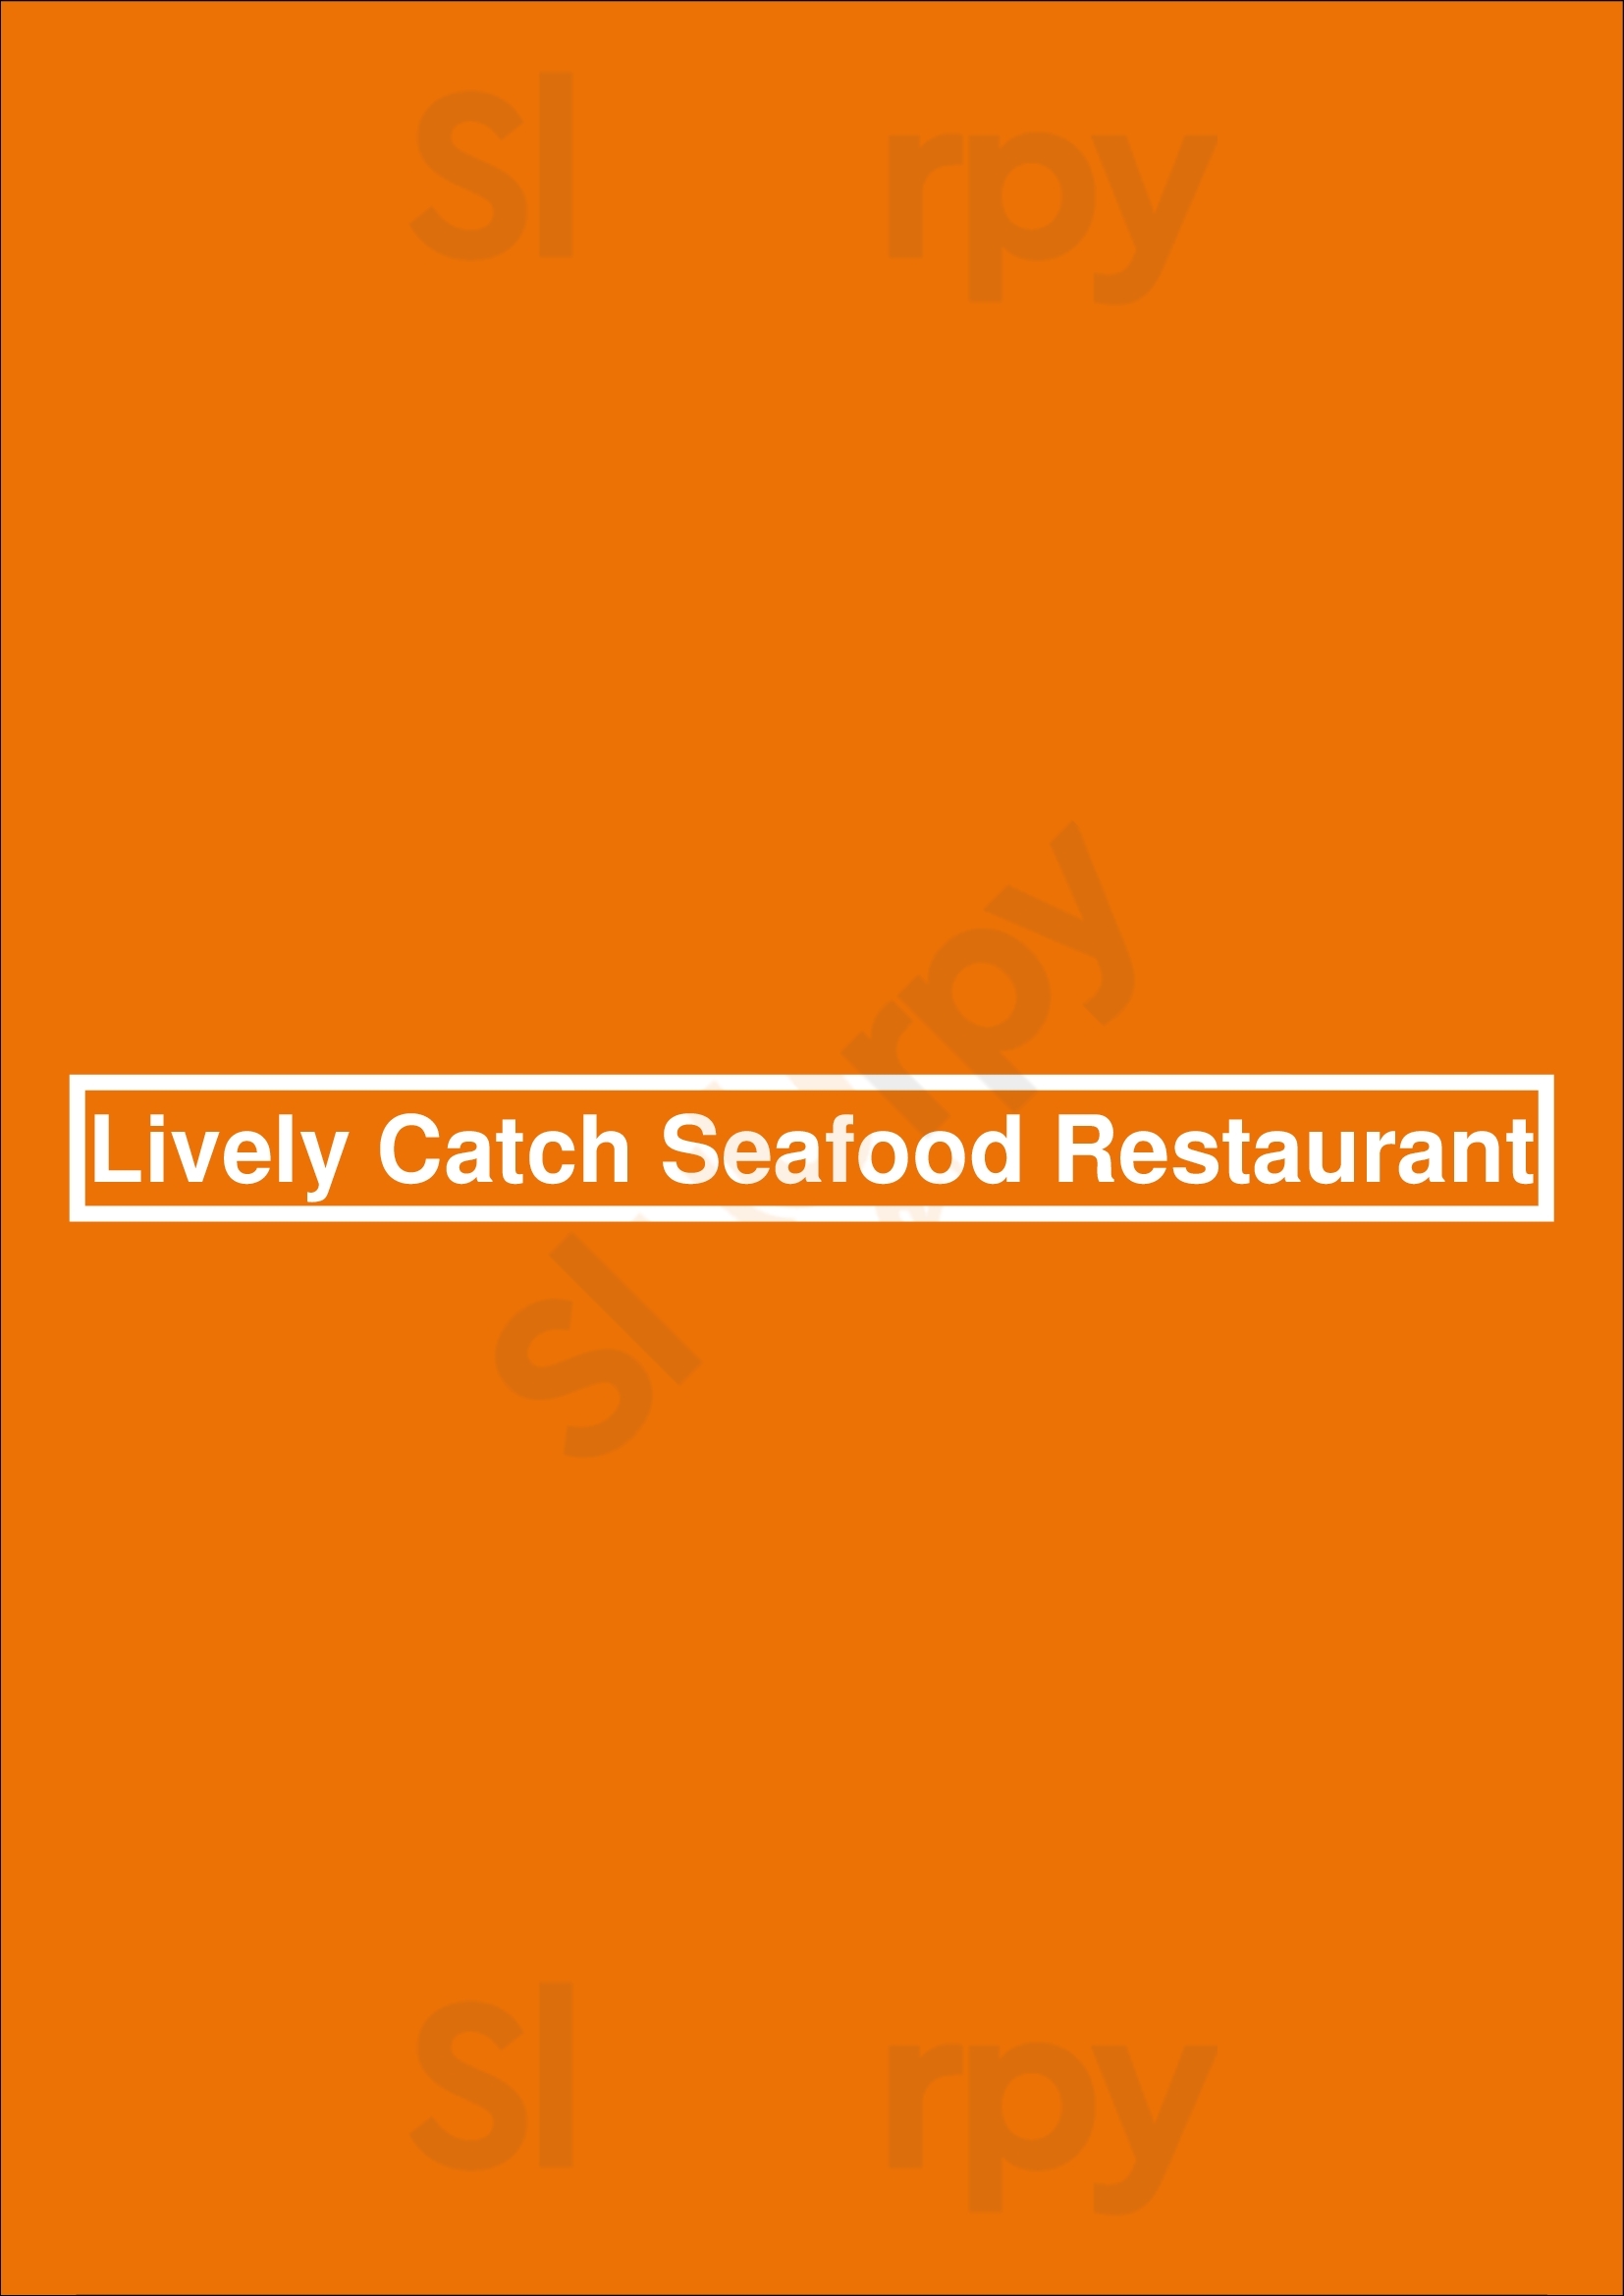 Lively Catch Seafood Restaurant Sydney Menu - 1